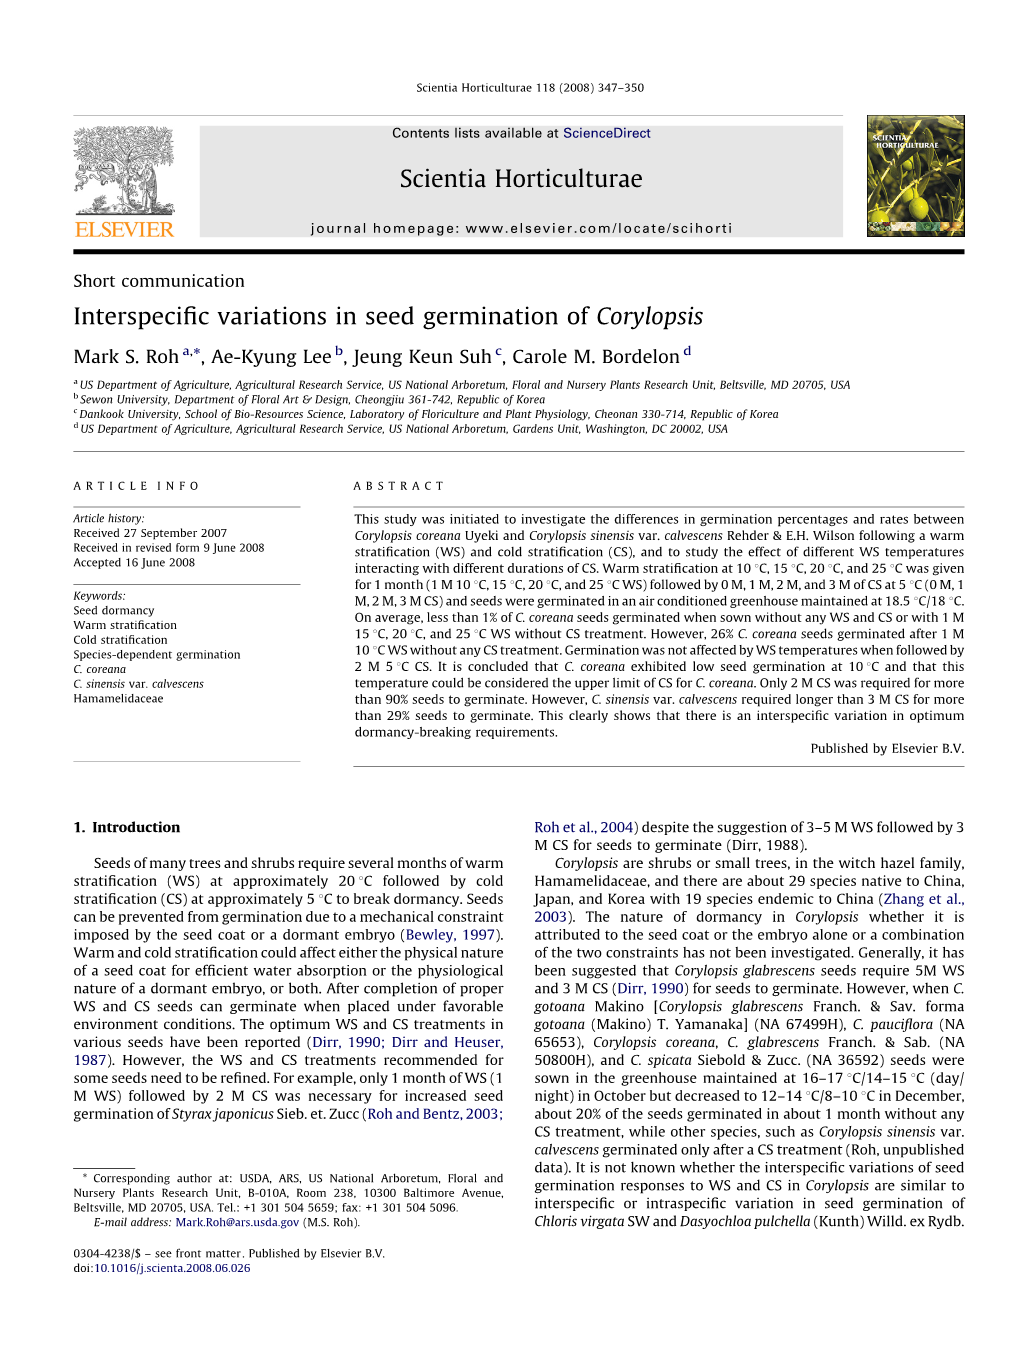 Interspecific Variations in Seed Germination of Corylopsis Scientia